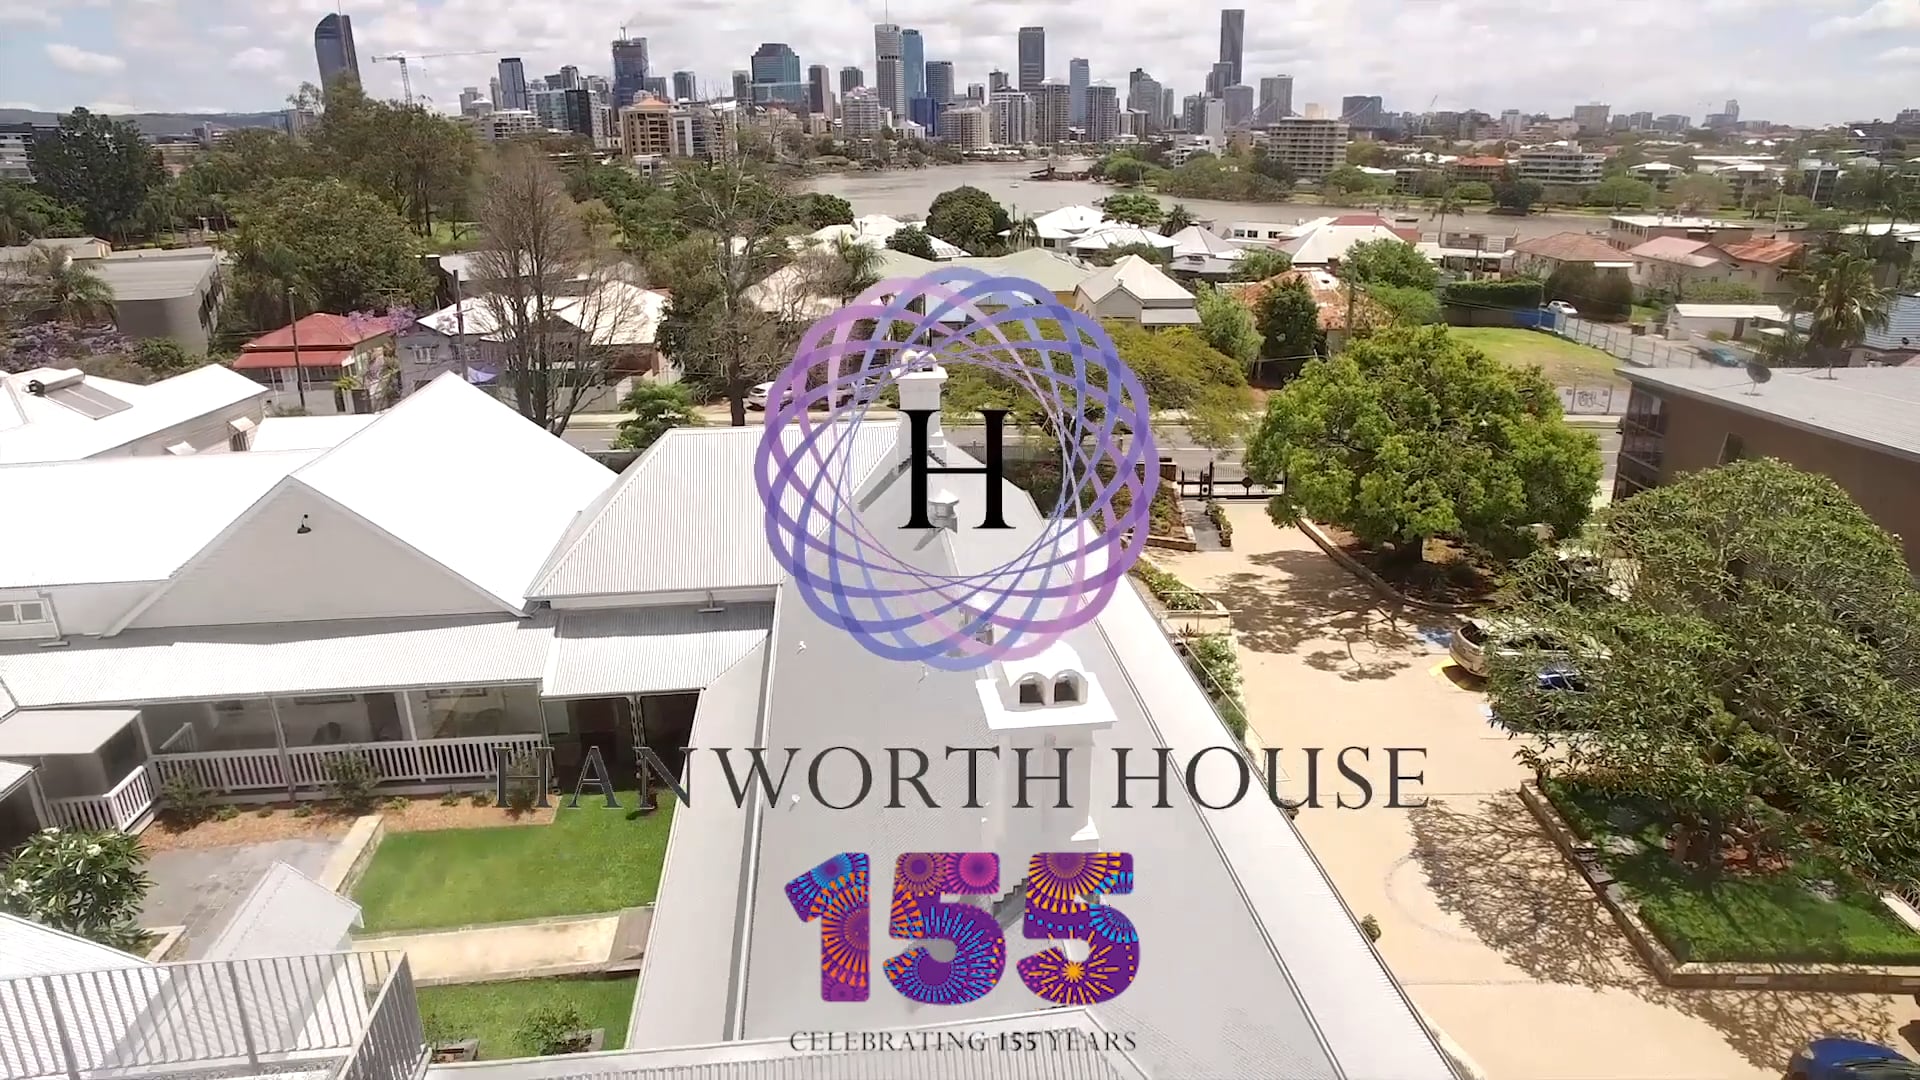 Hanworth House 155 Birthday